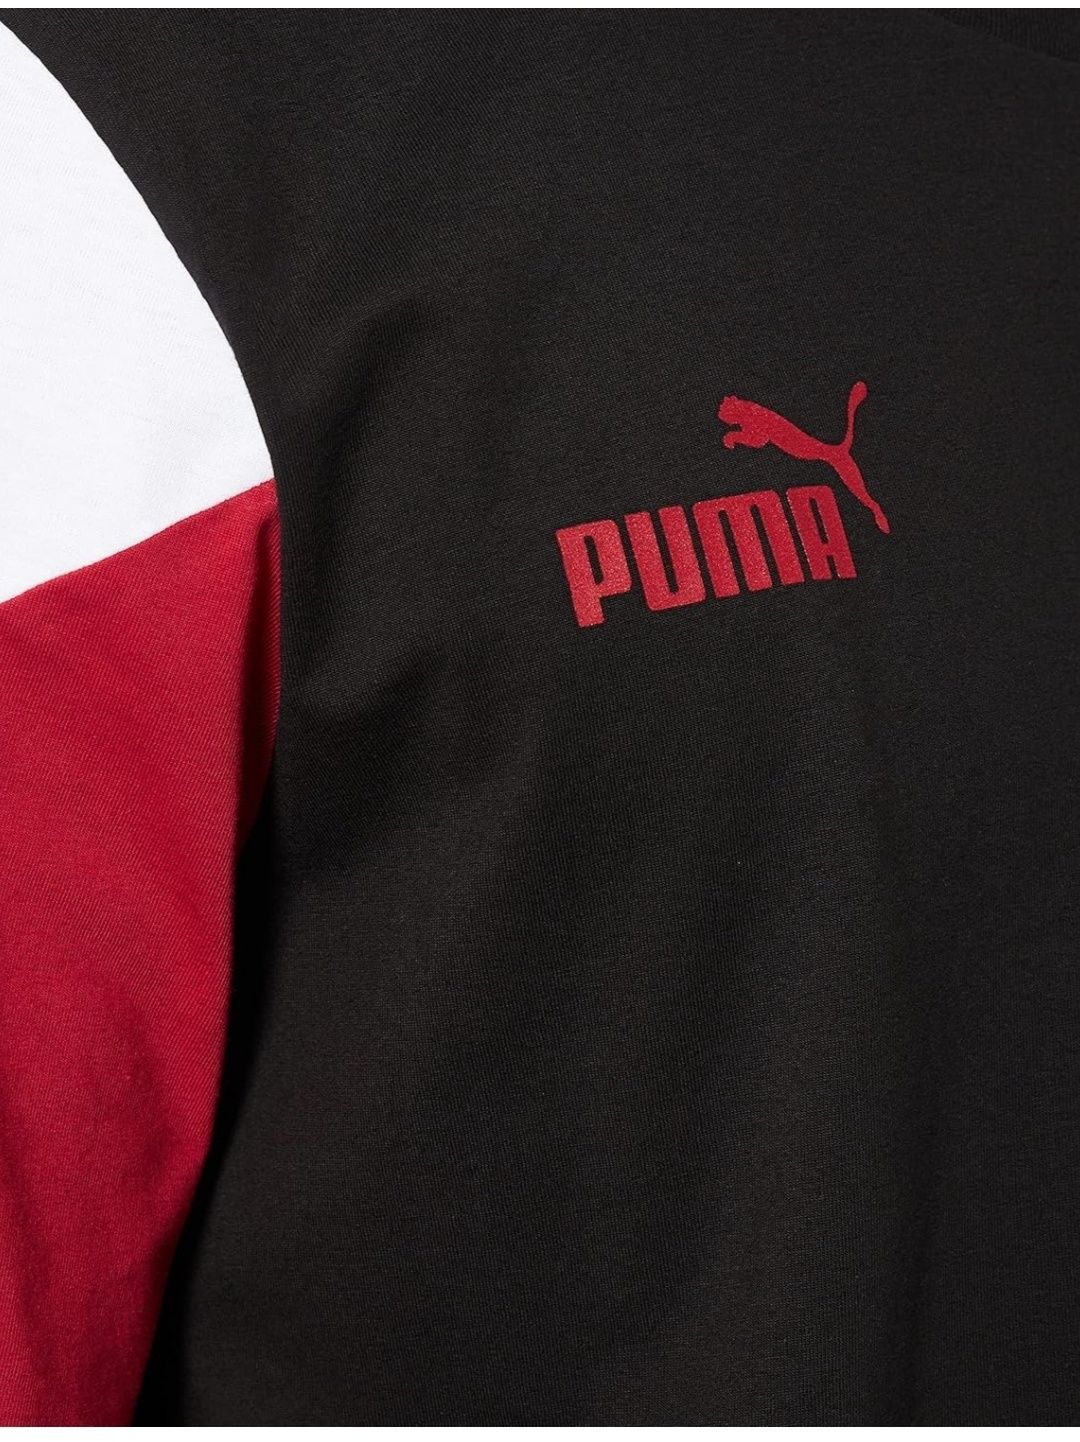 Puma koszulka Valencia fc r.L nowa okazja oryginalna